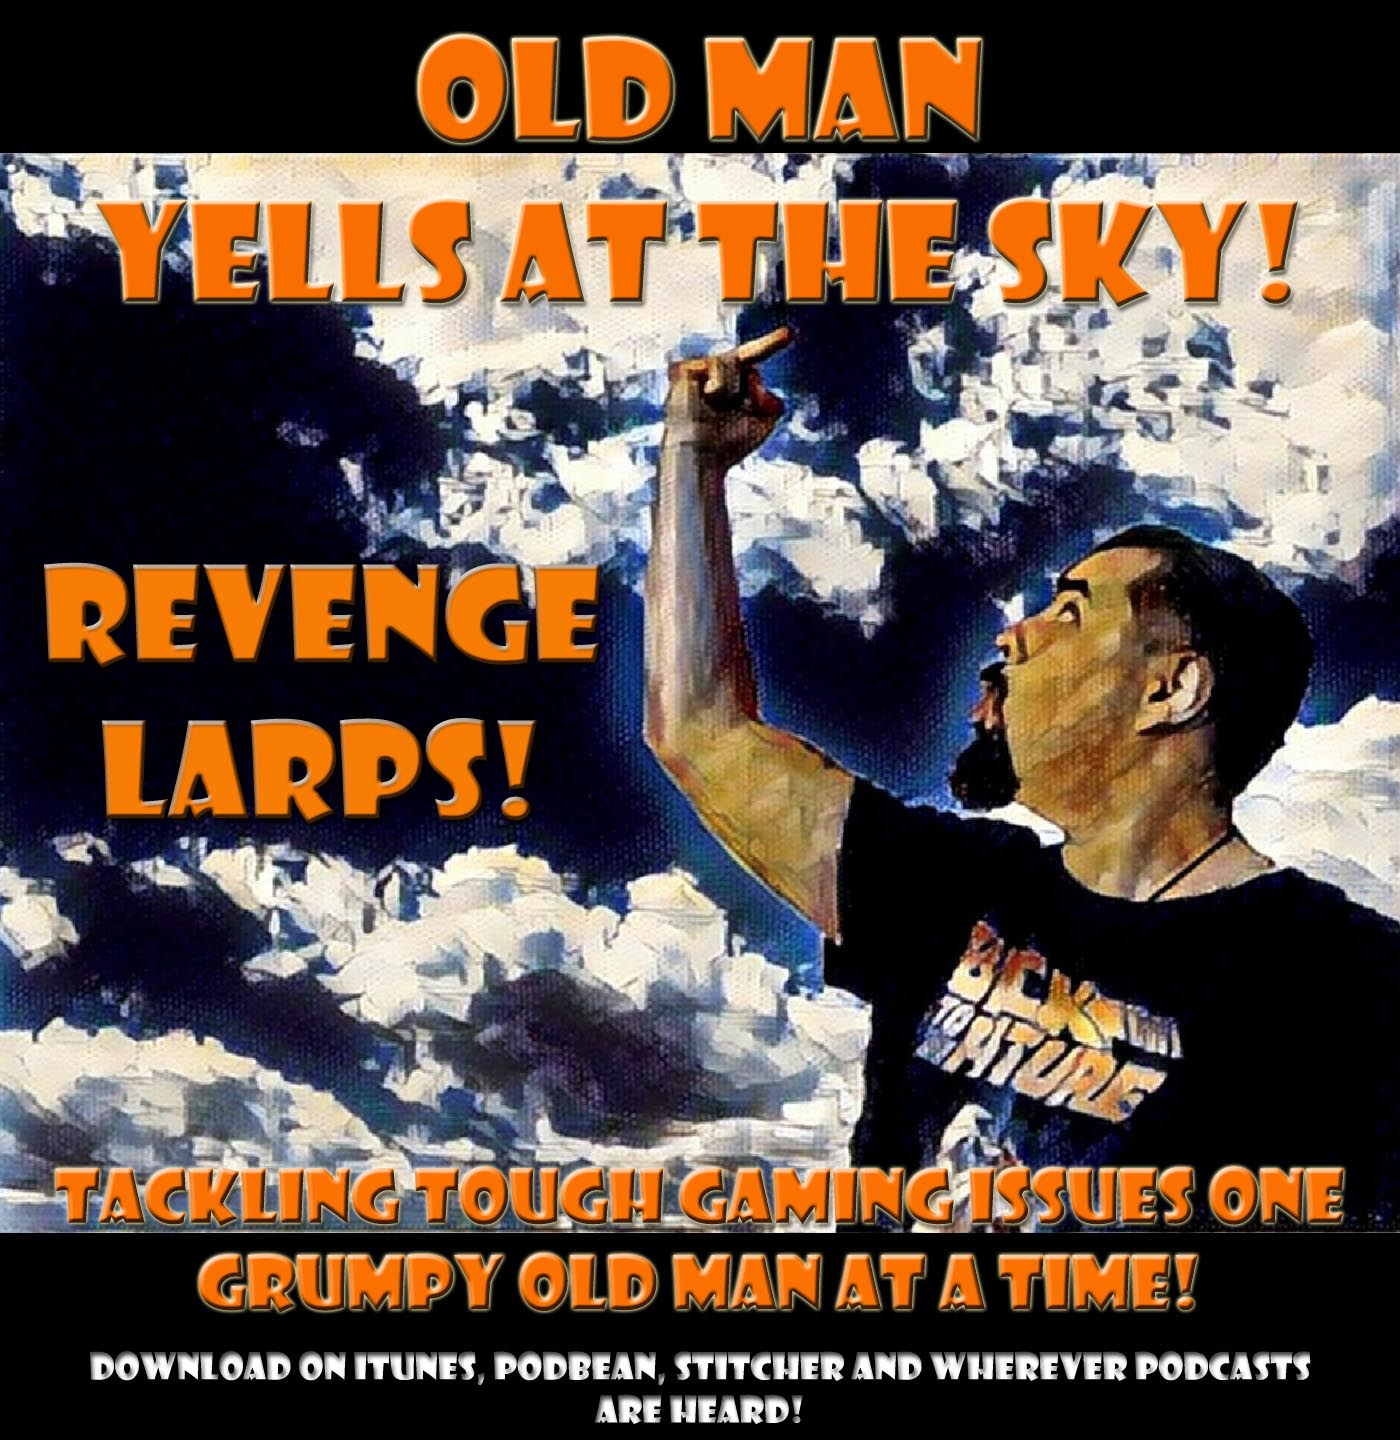 Old Man Yells at the Sky: Revenge LARPS!